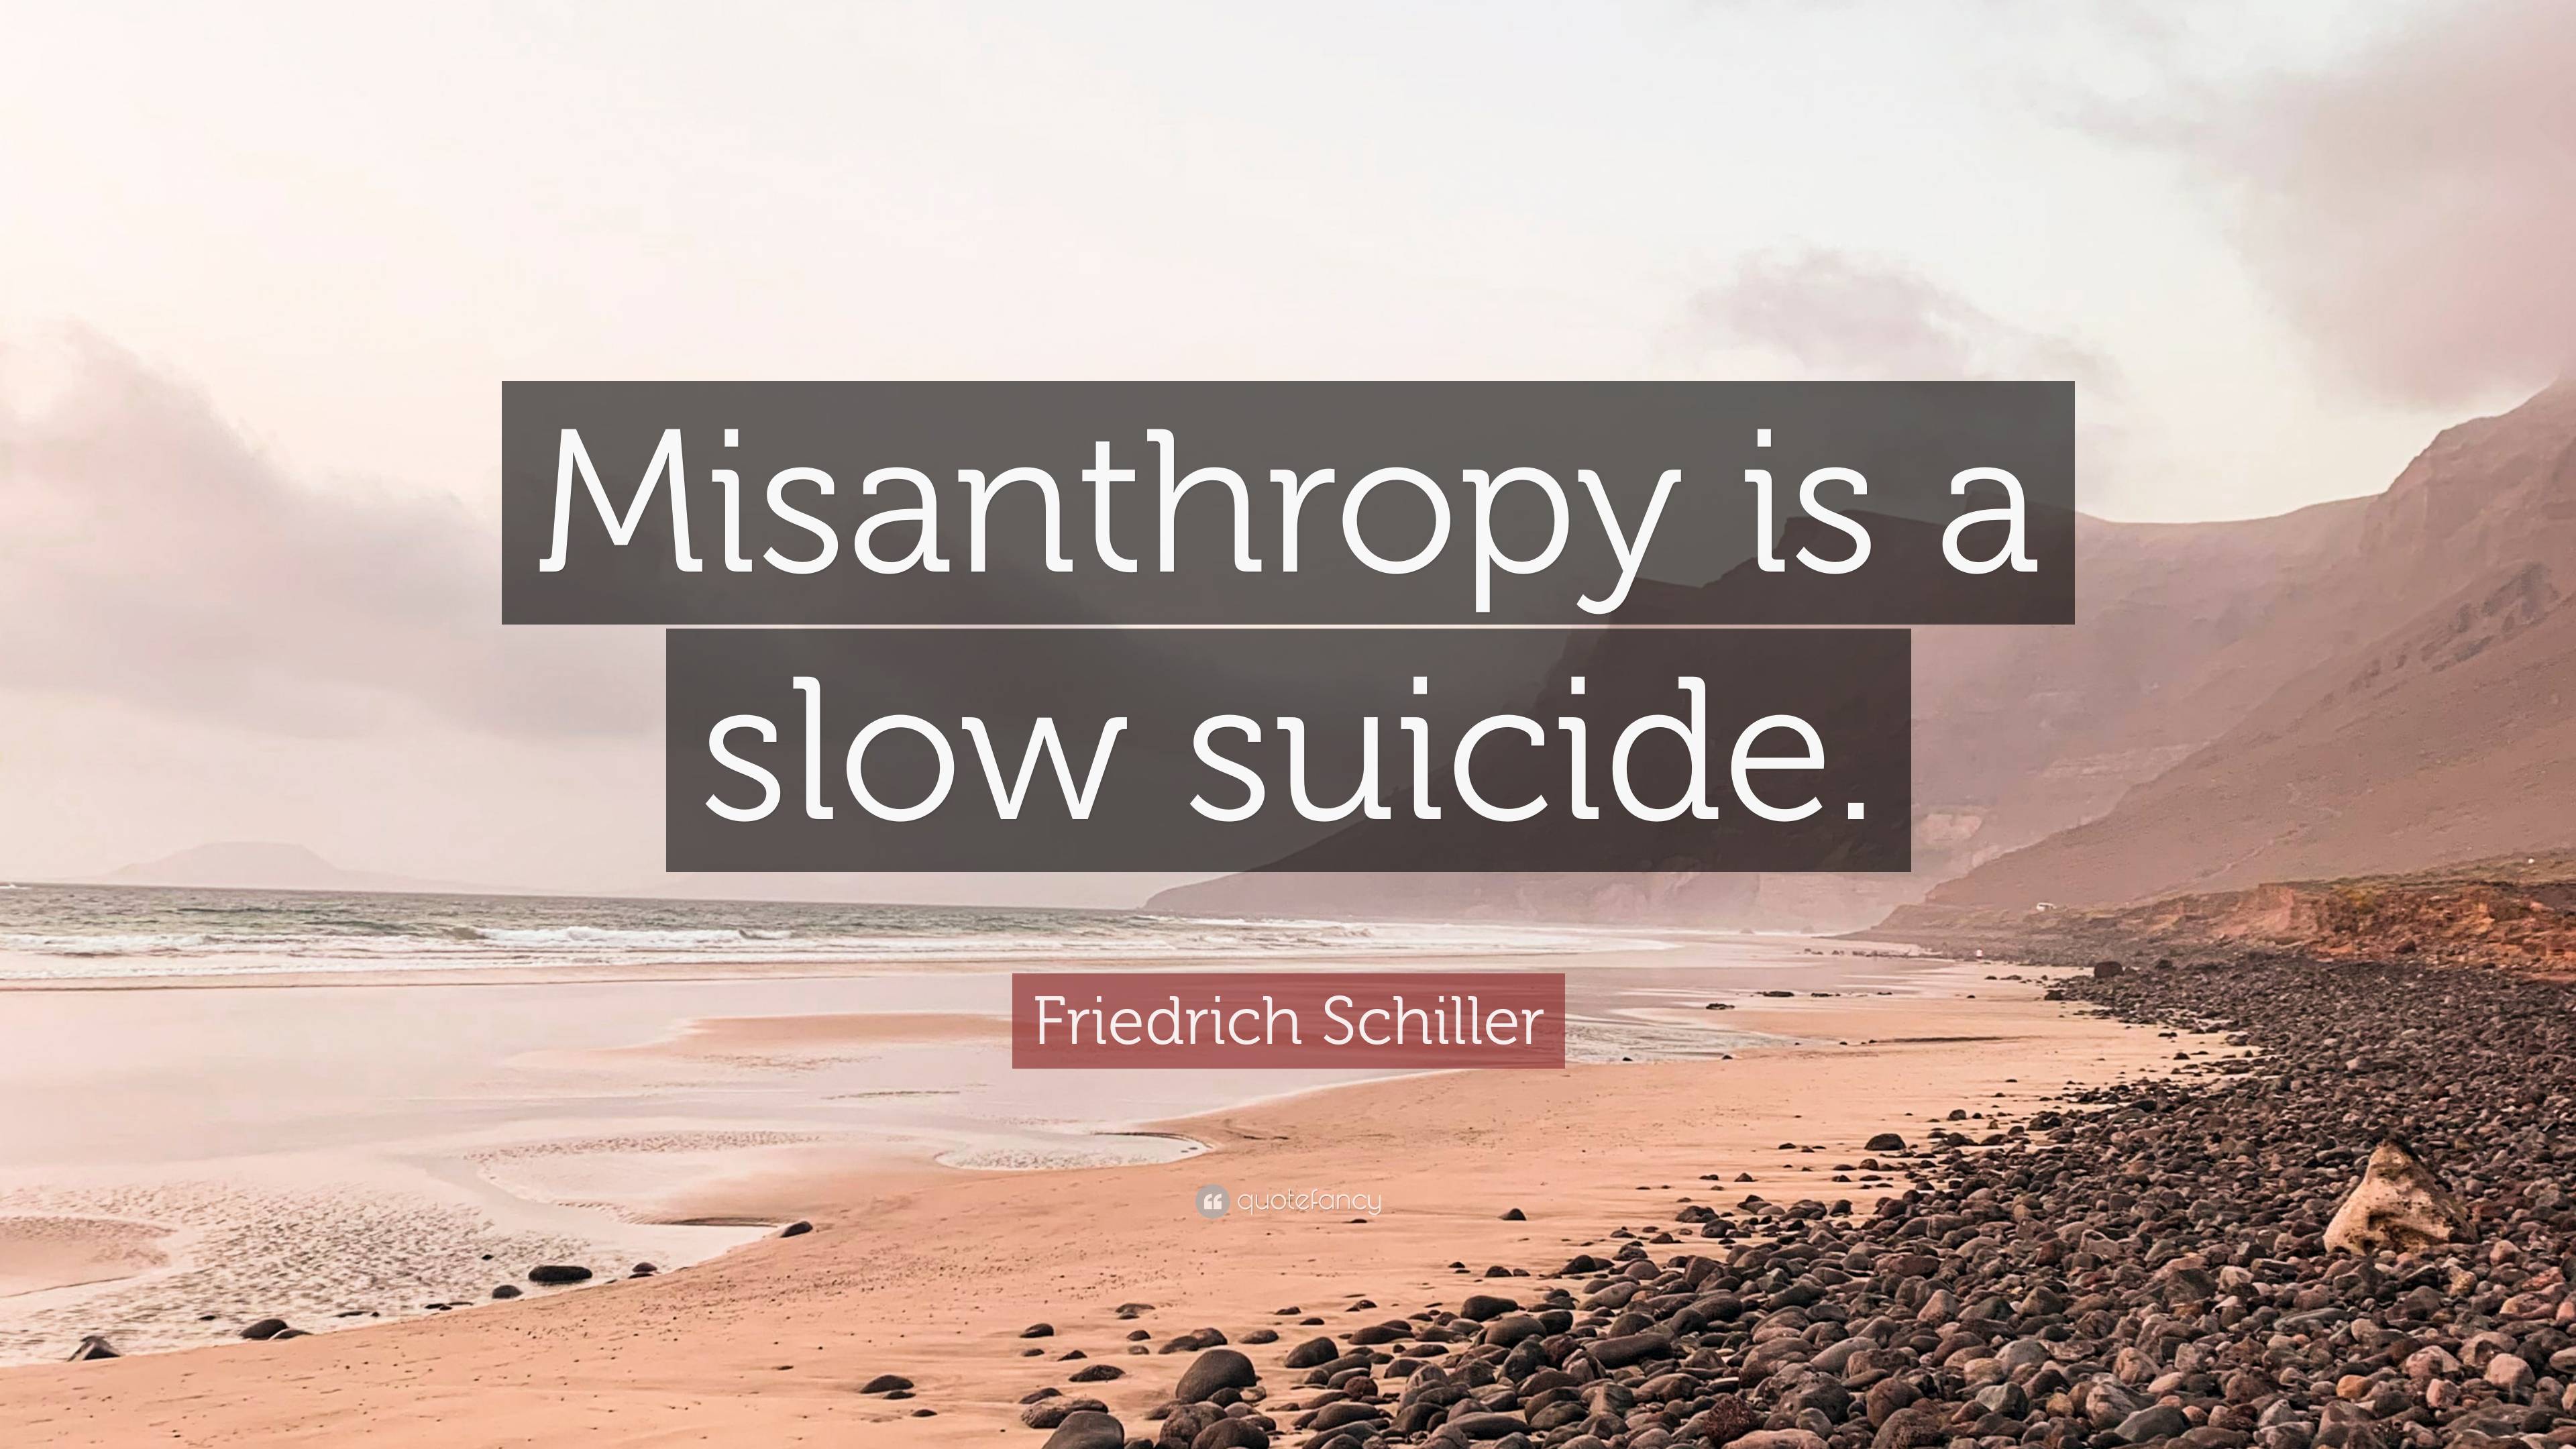 Friedrich Schiller Quote: “Misanthropy is a slow suicide.”